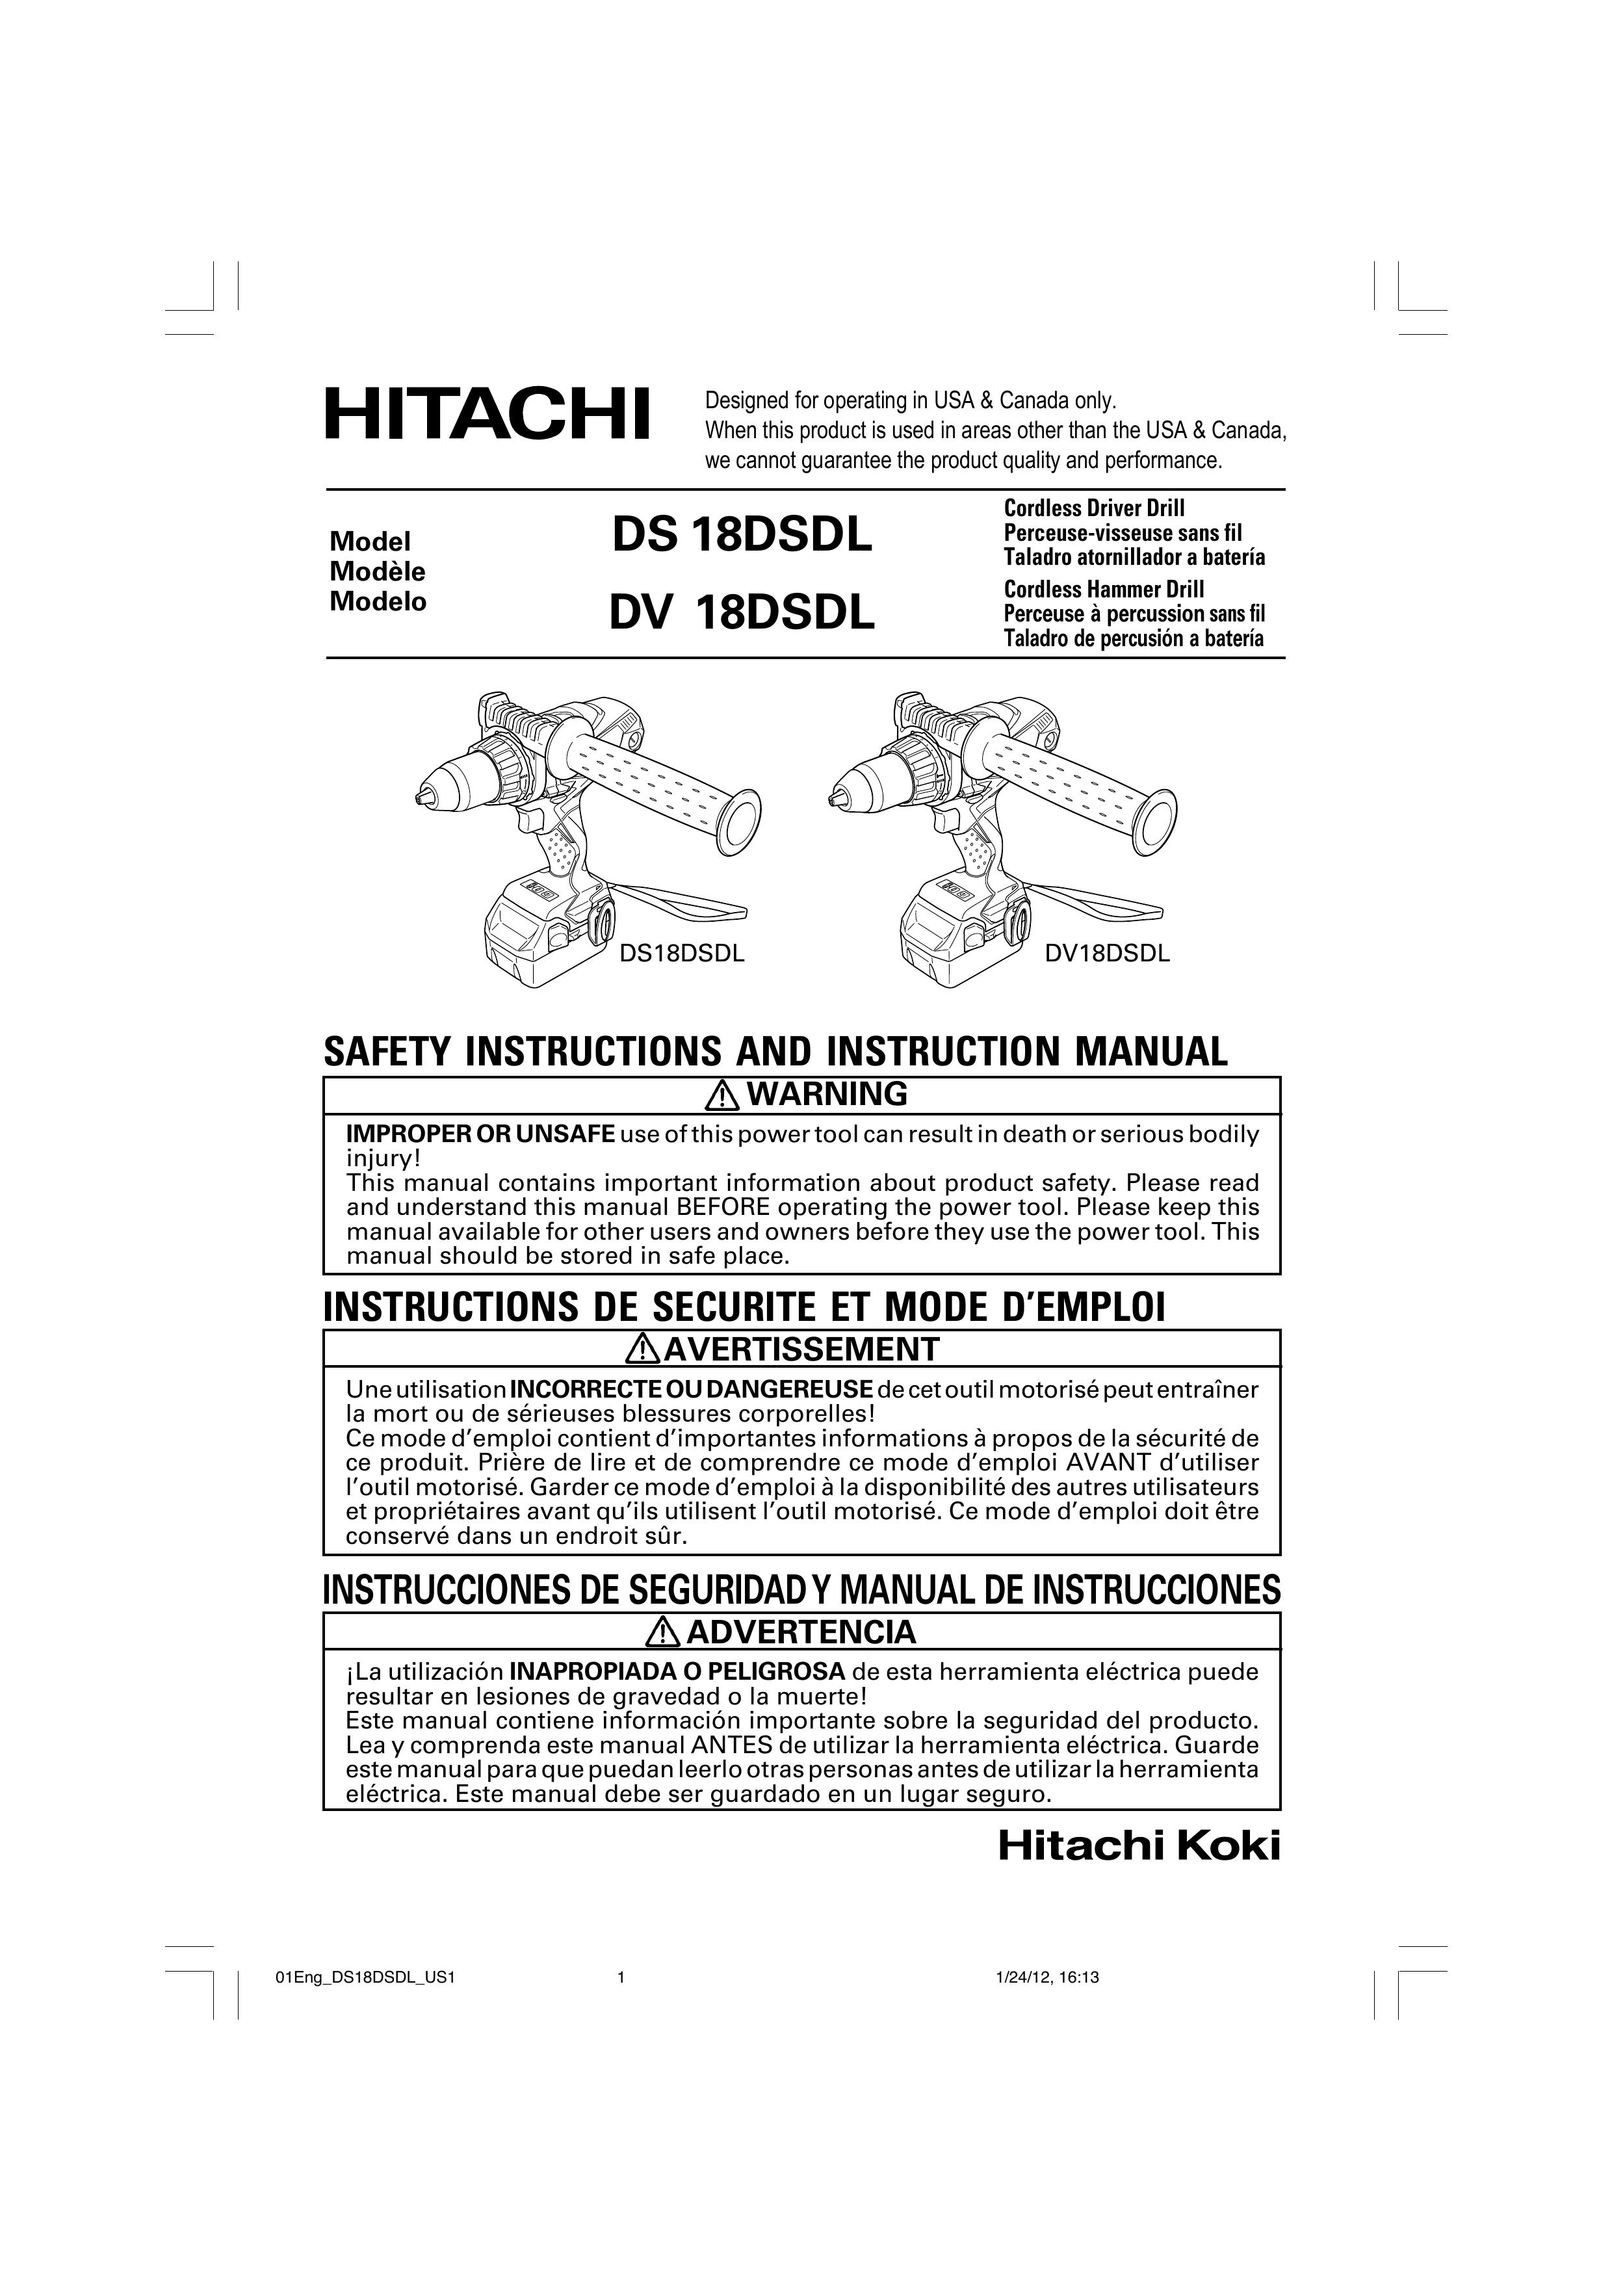 Hitachi DS18DSDL Cordless Drill User Manual